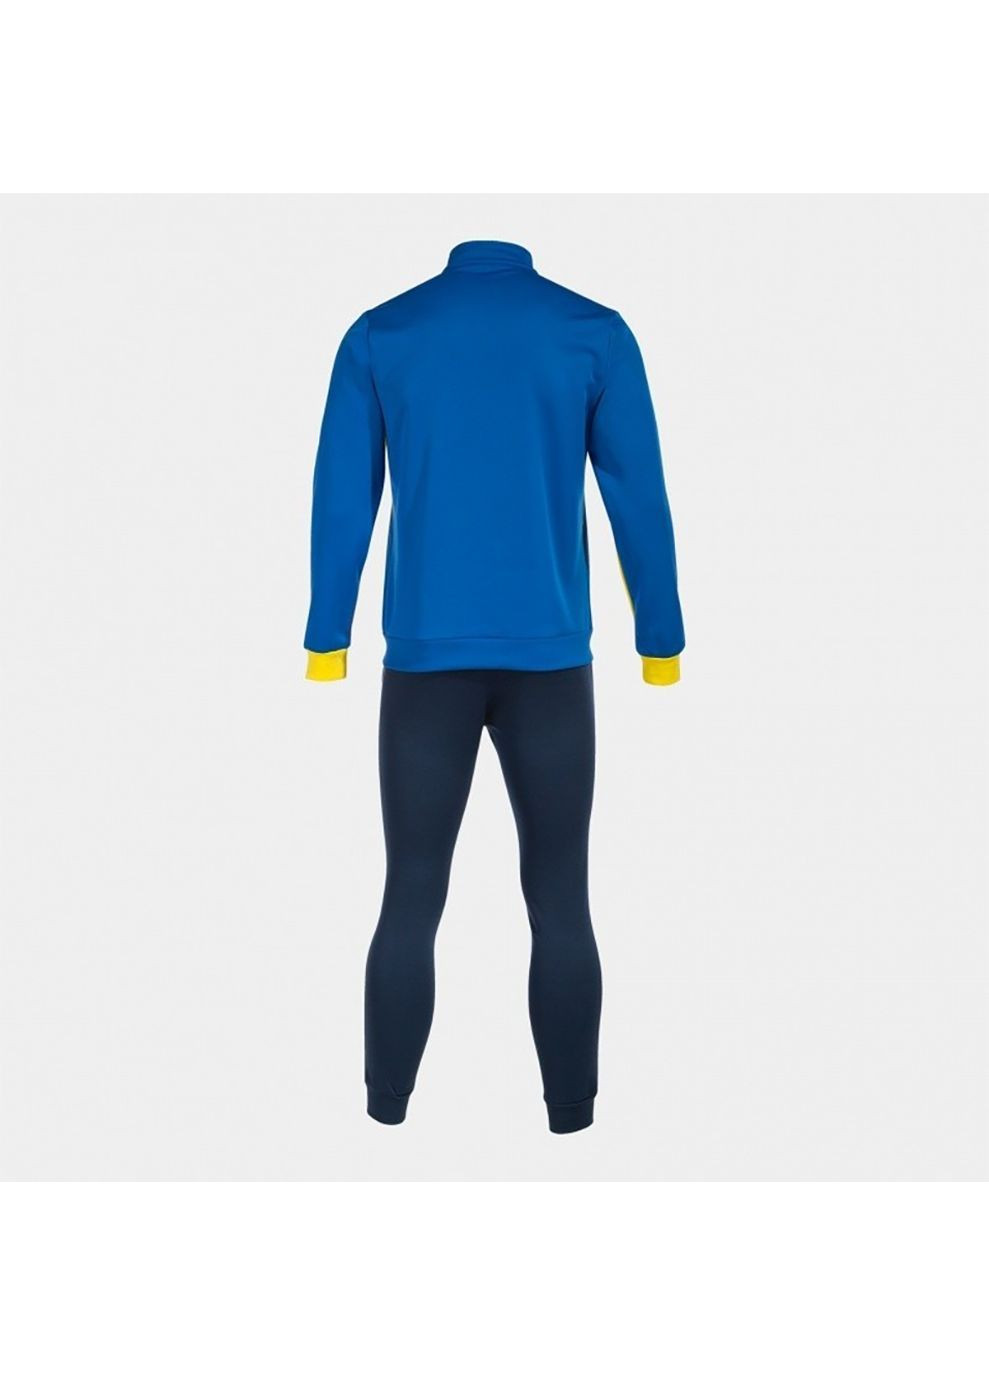 Спортивный костюм DERBY синий,голубой Joma (282318032)